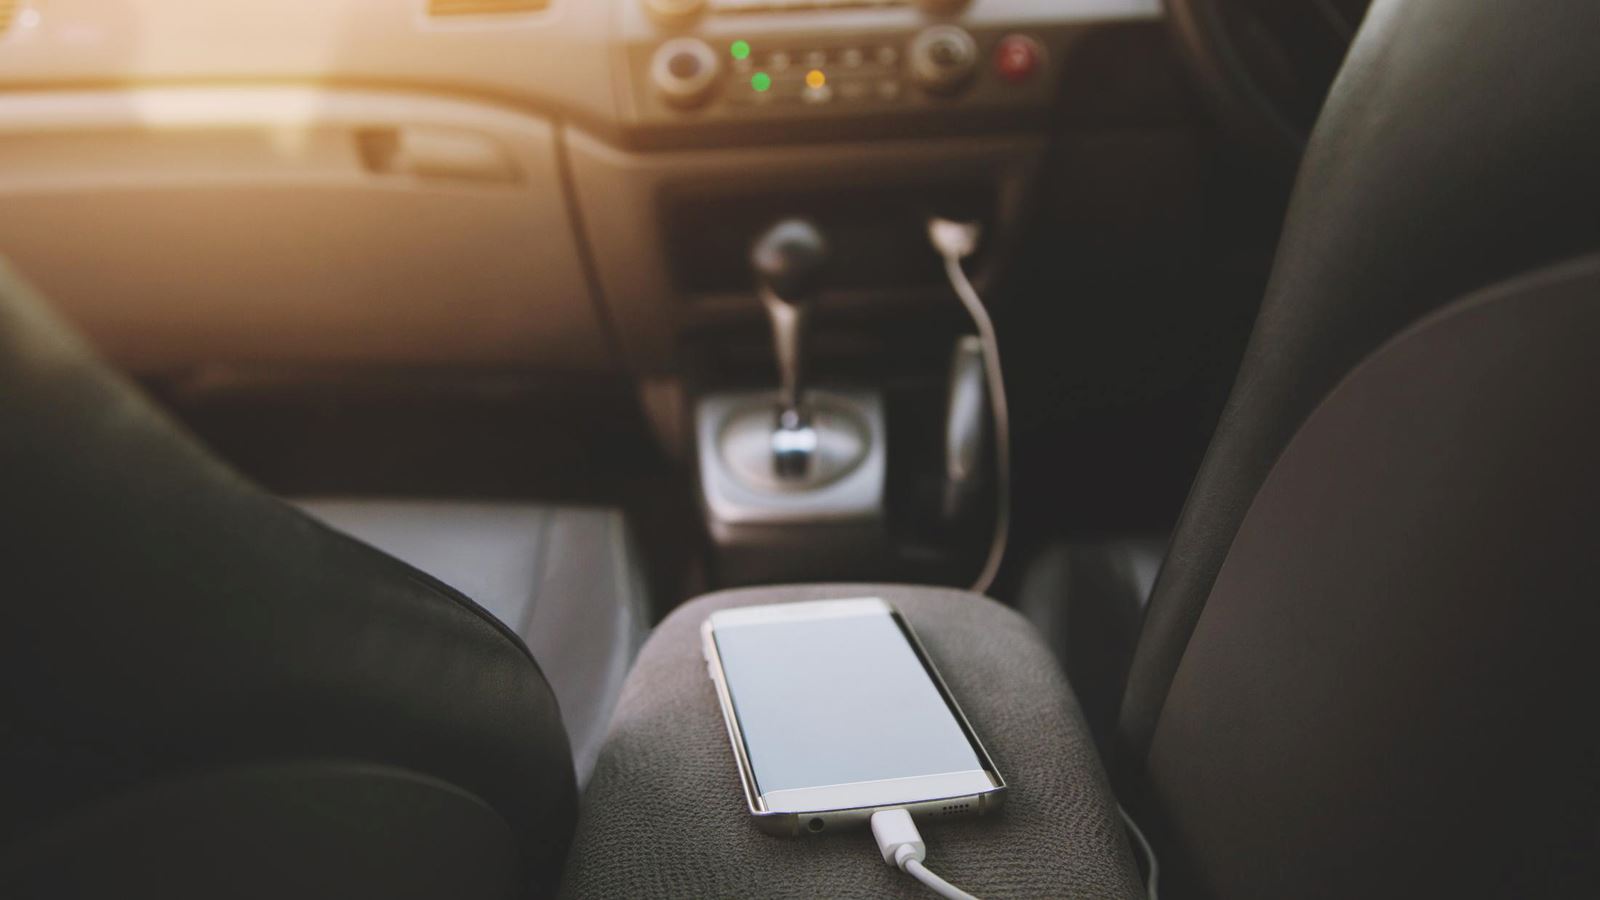 Mobile phone charging in car